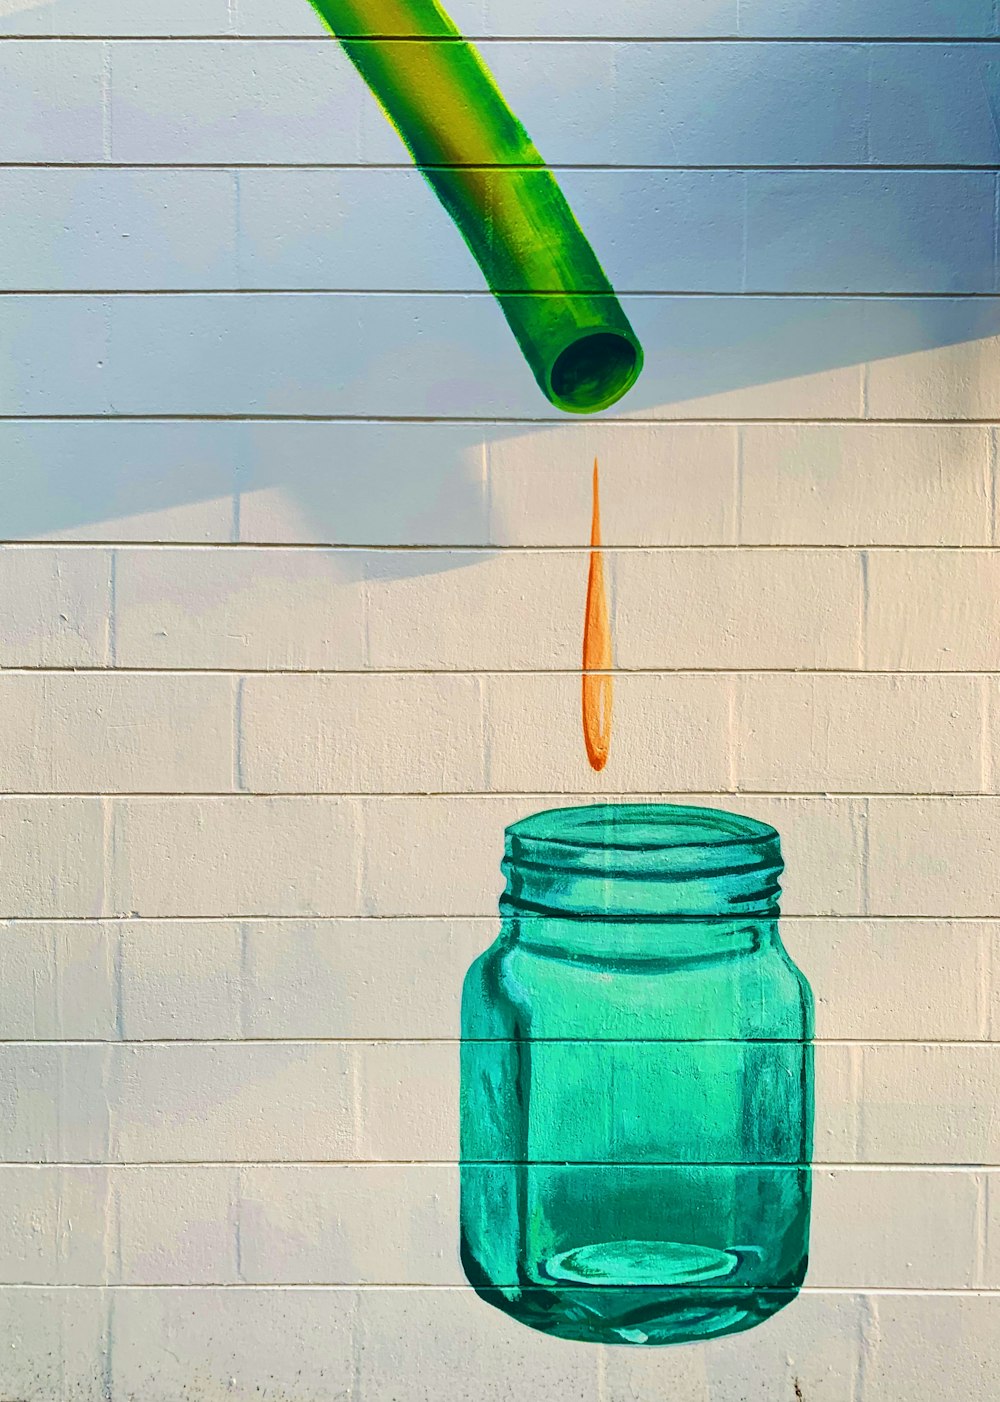 teal printed jar on concrete wall